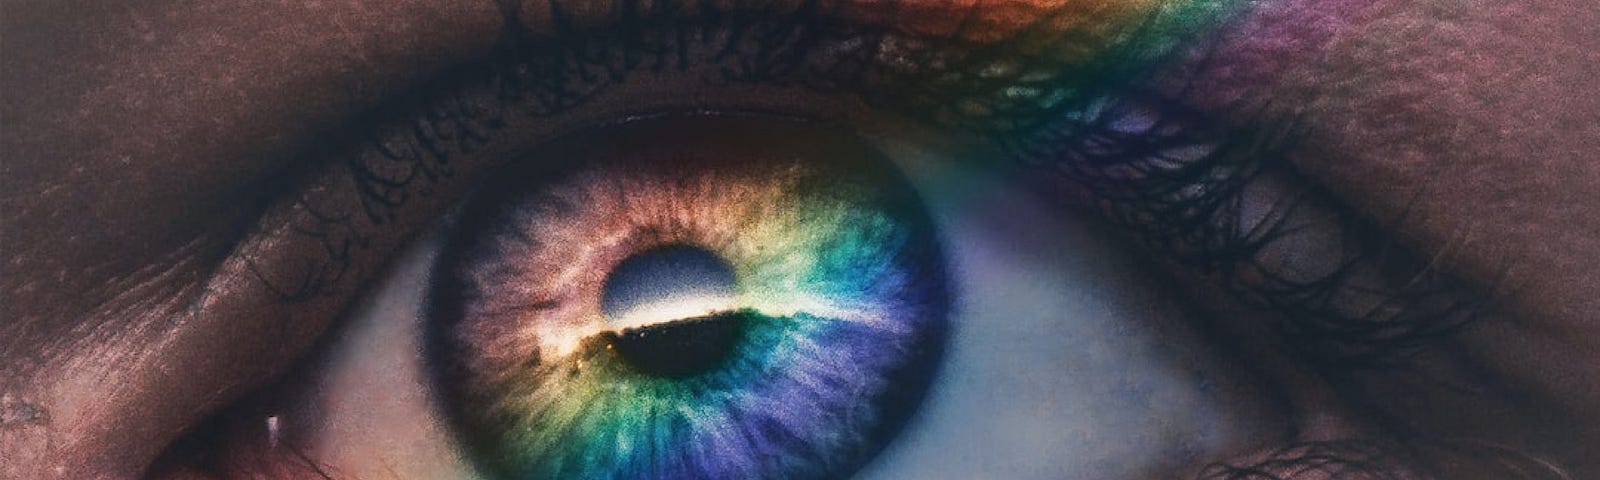 A rainbow passing over an eye.